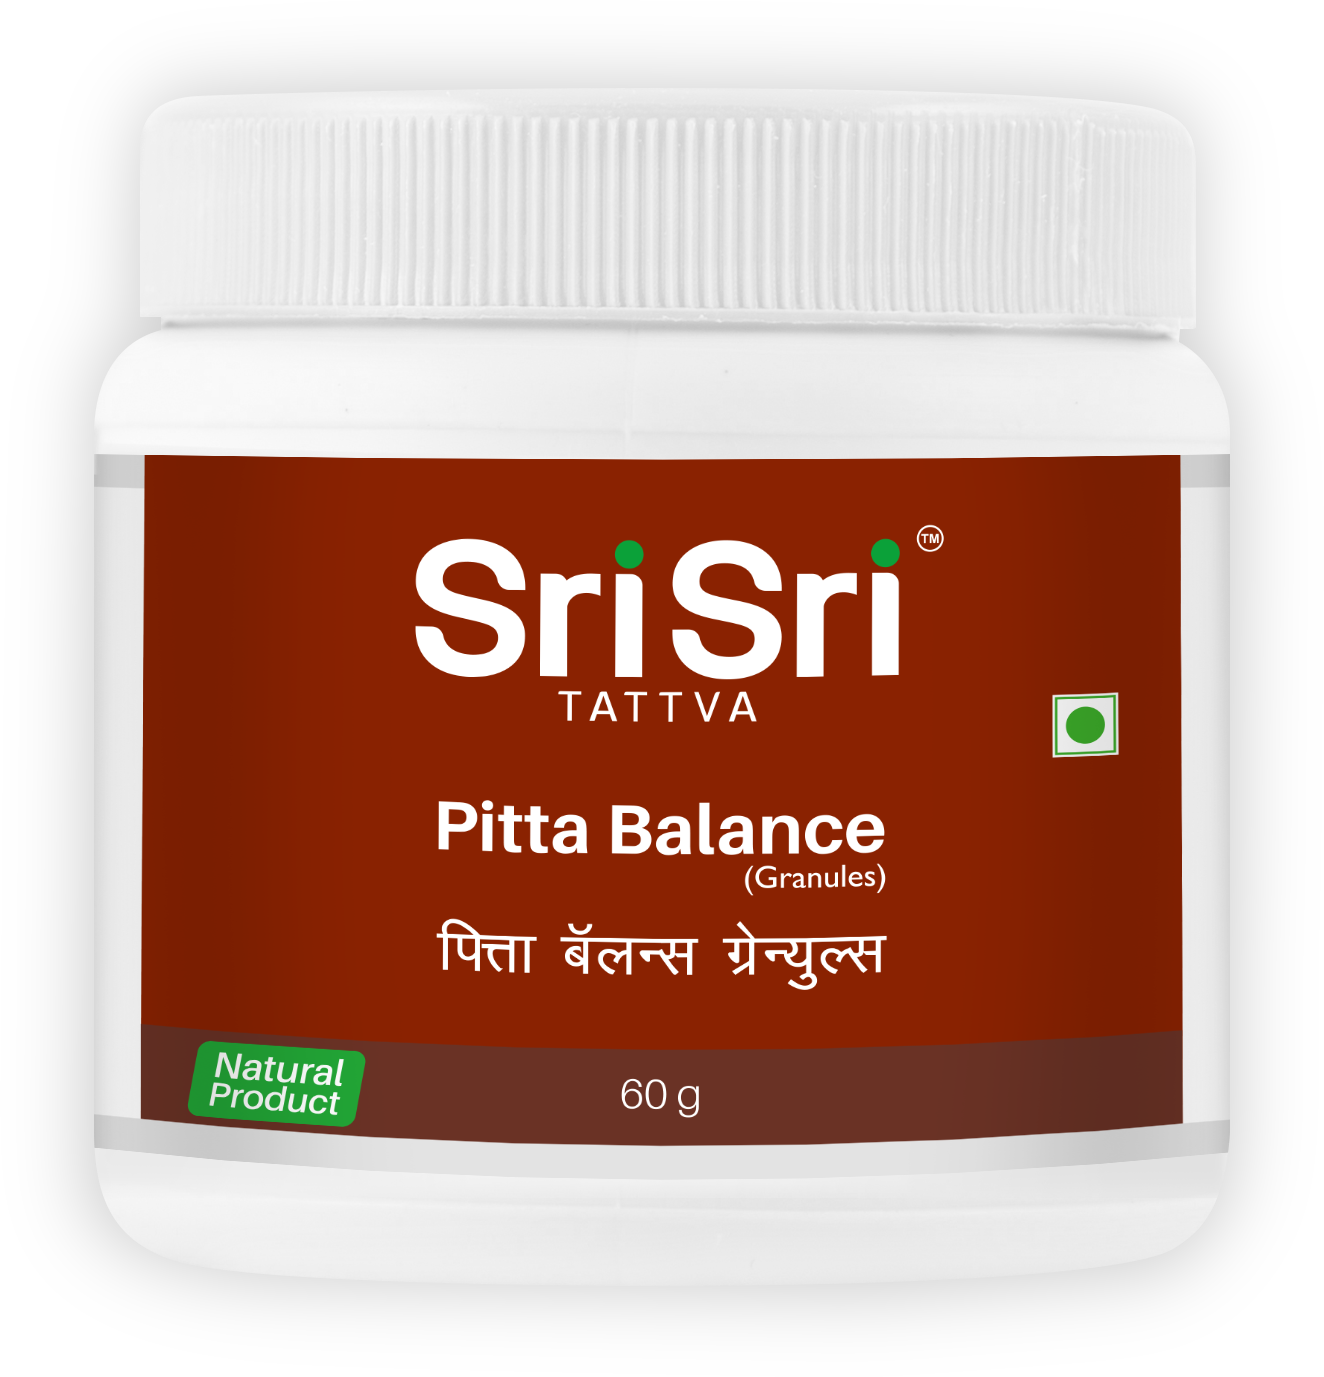 Buy Sri Sri Tattva Pitta Balance Granules at Best Price Online